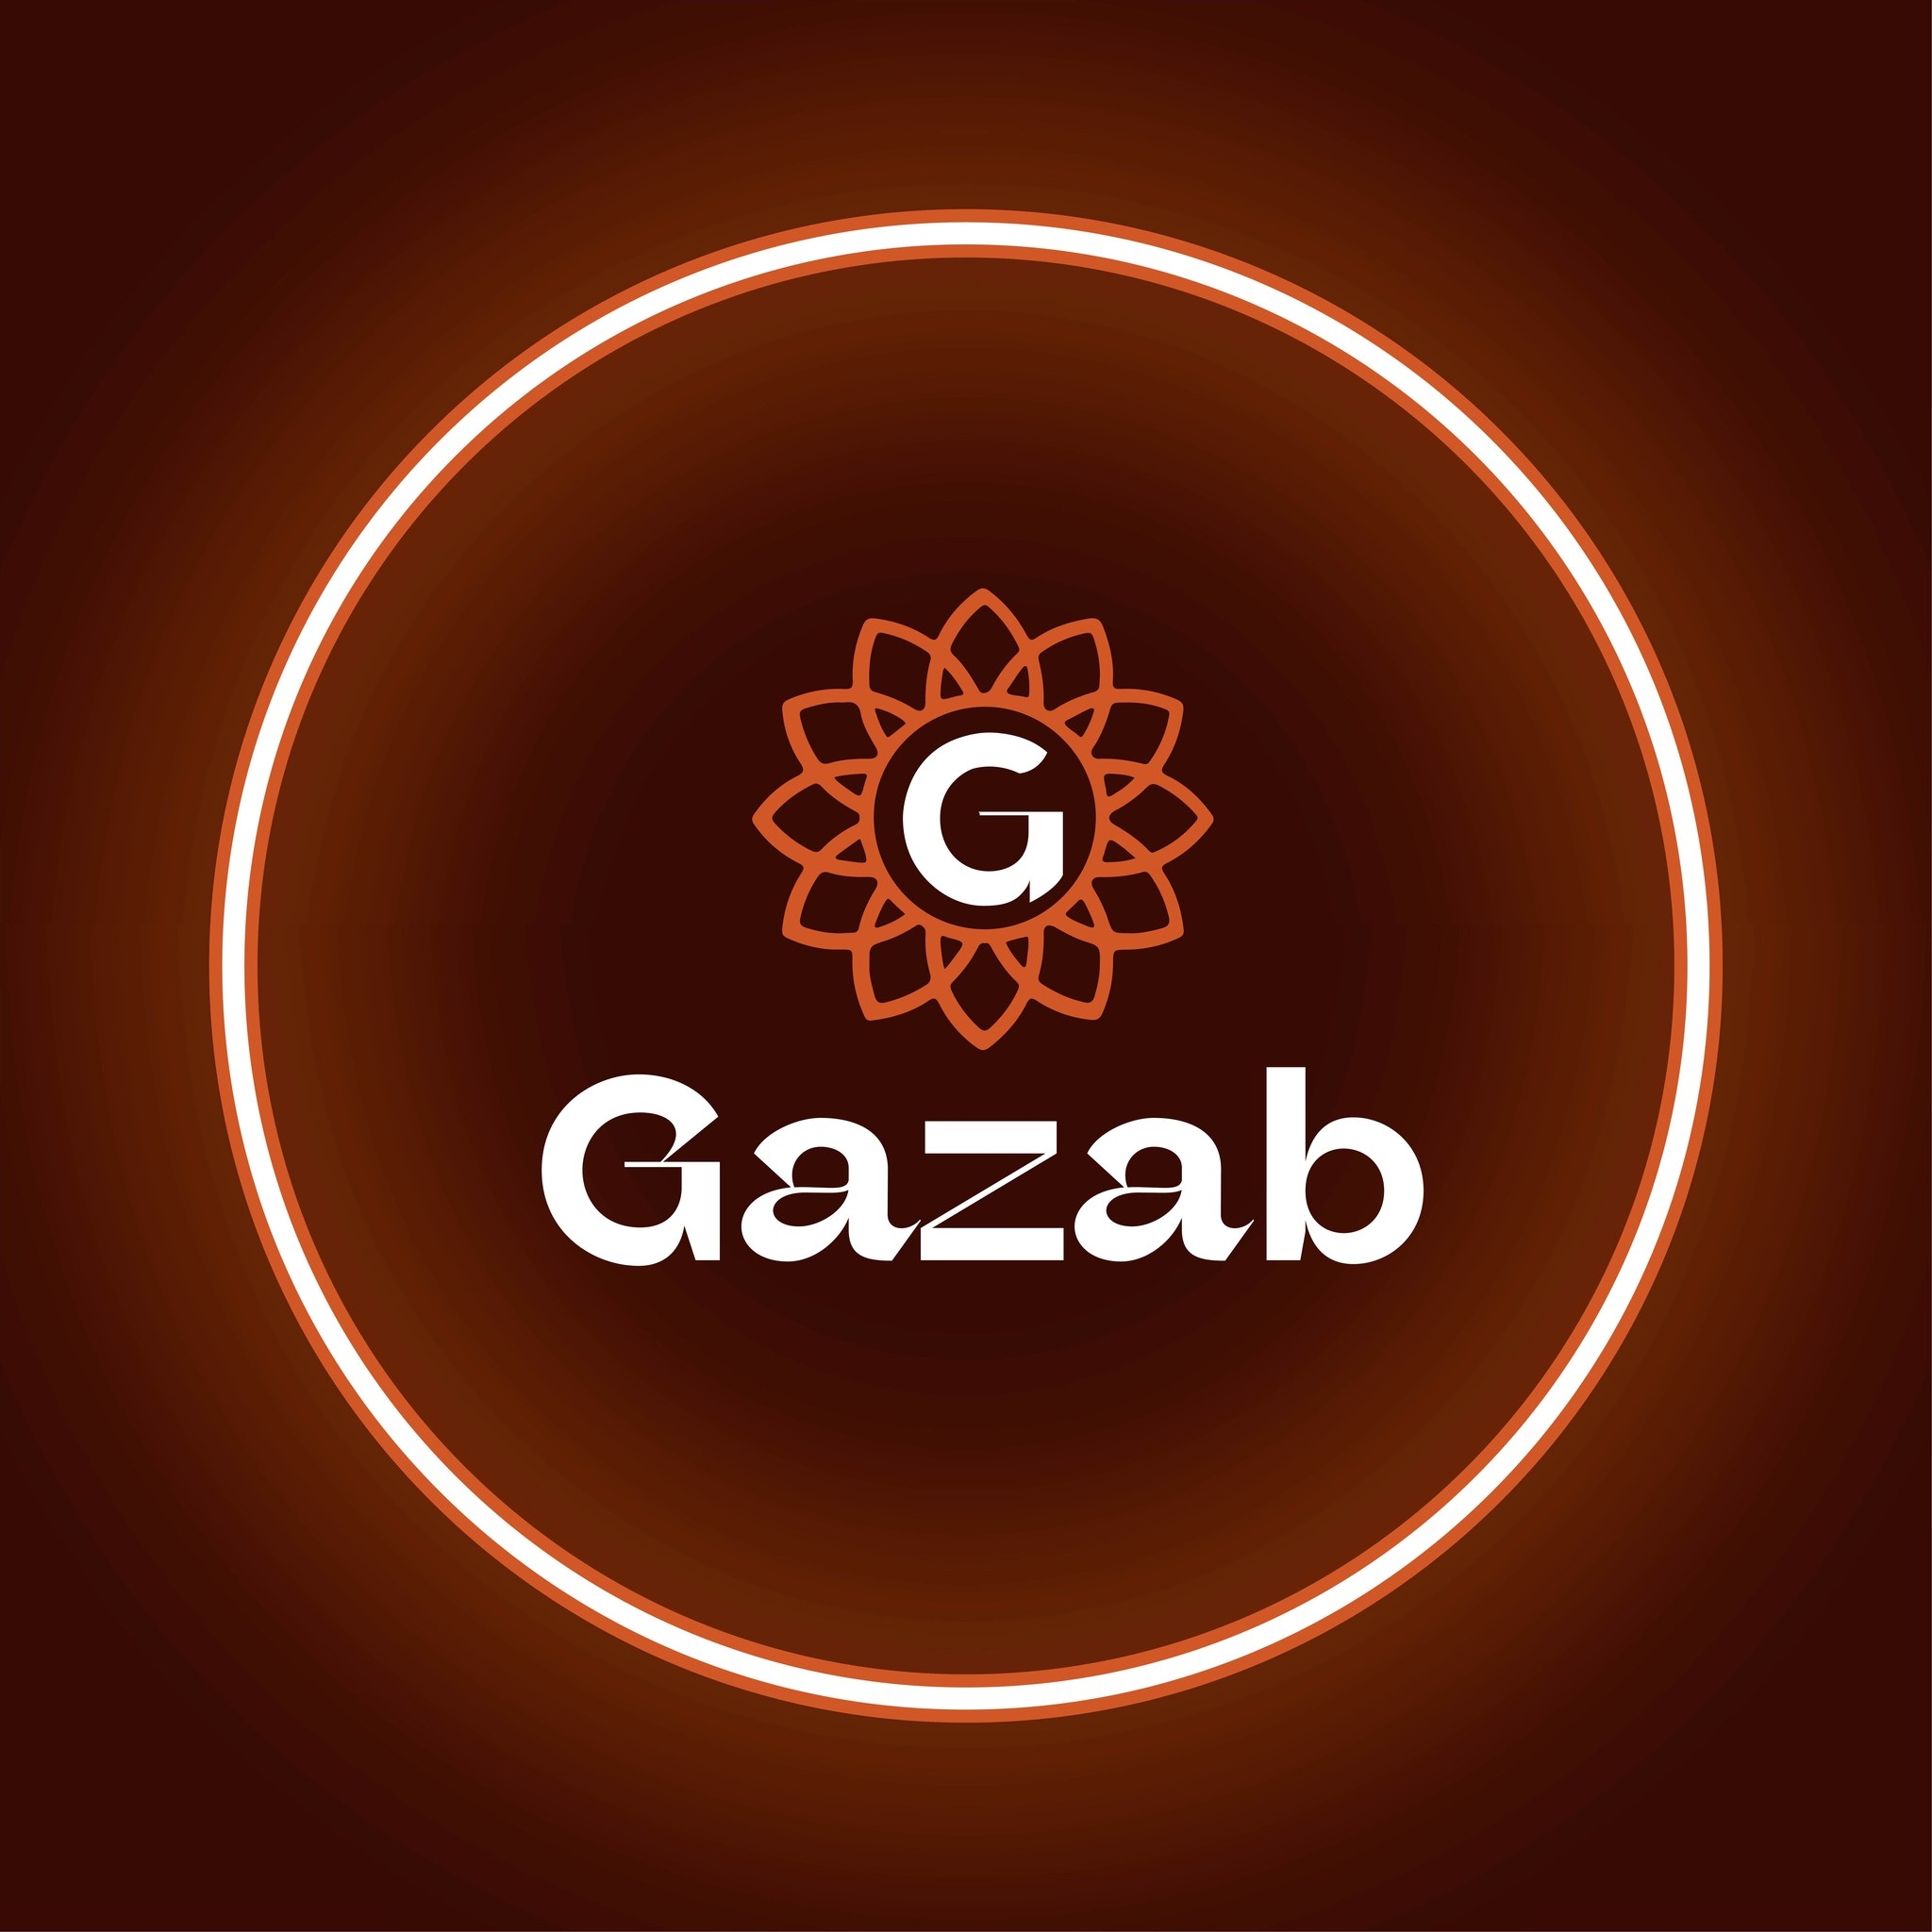  Gazab Indian Restaurant & Bar Bella Vista Menu | Gazab Indian Restaurant & Bar